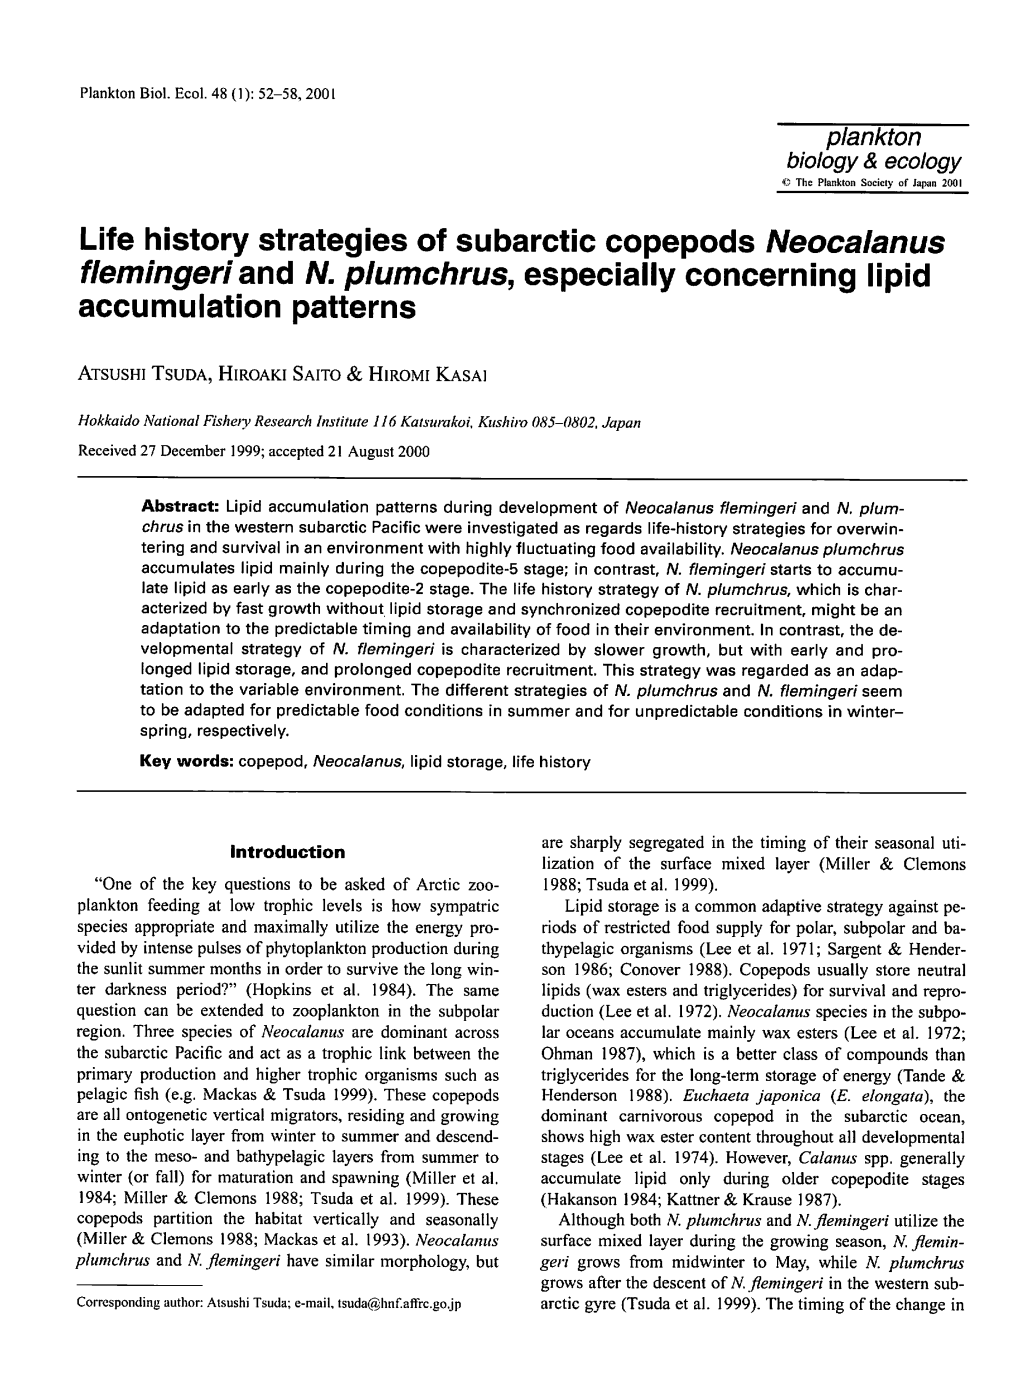 Life History Strategies of Subarctic Copepods Neocalanus Flemingeriand N